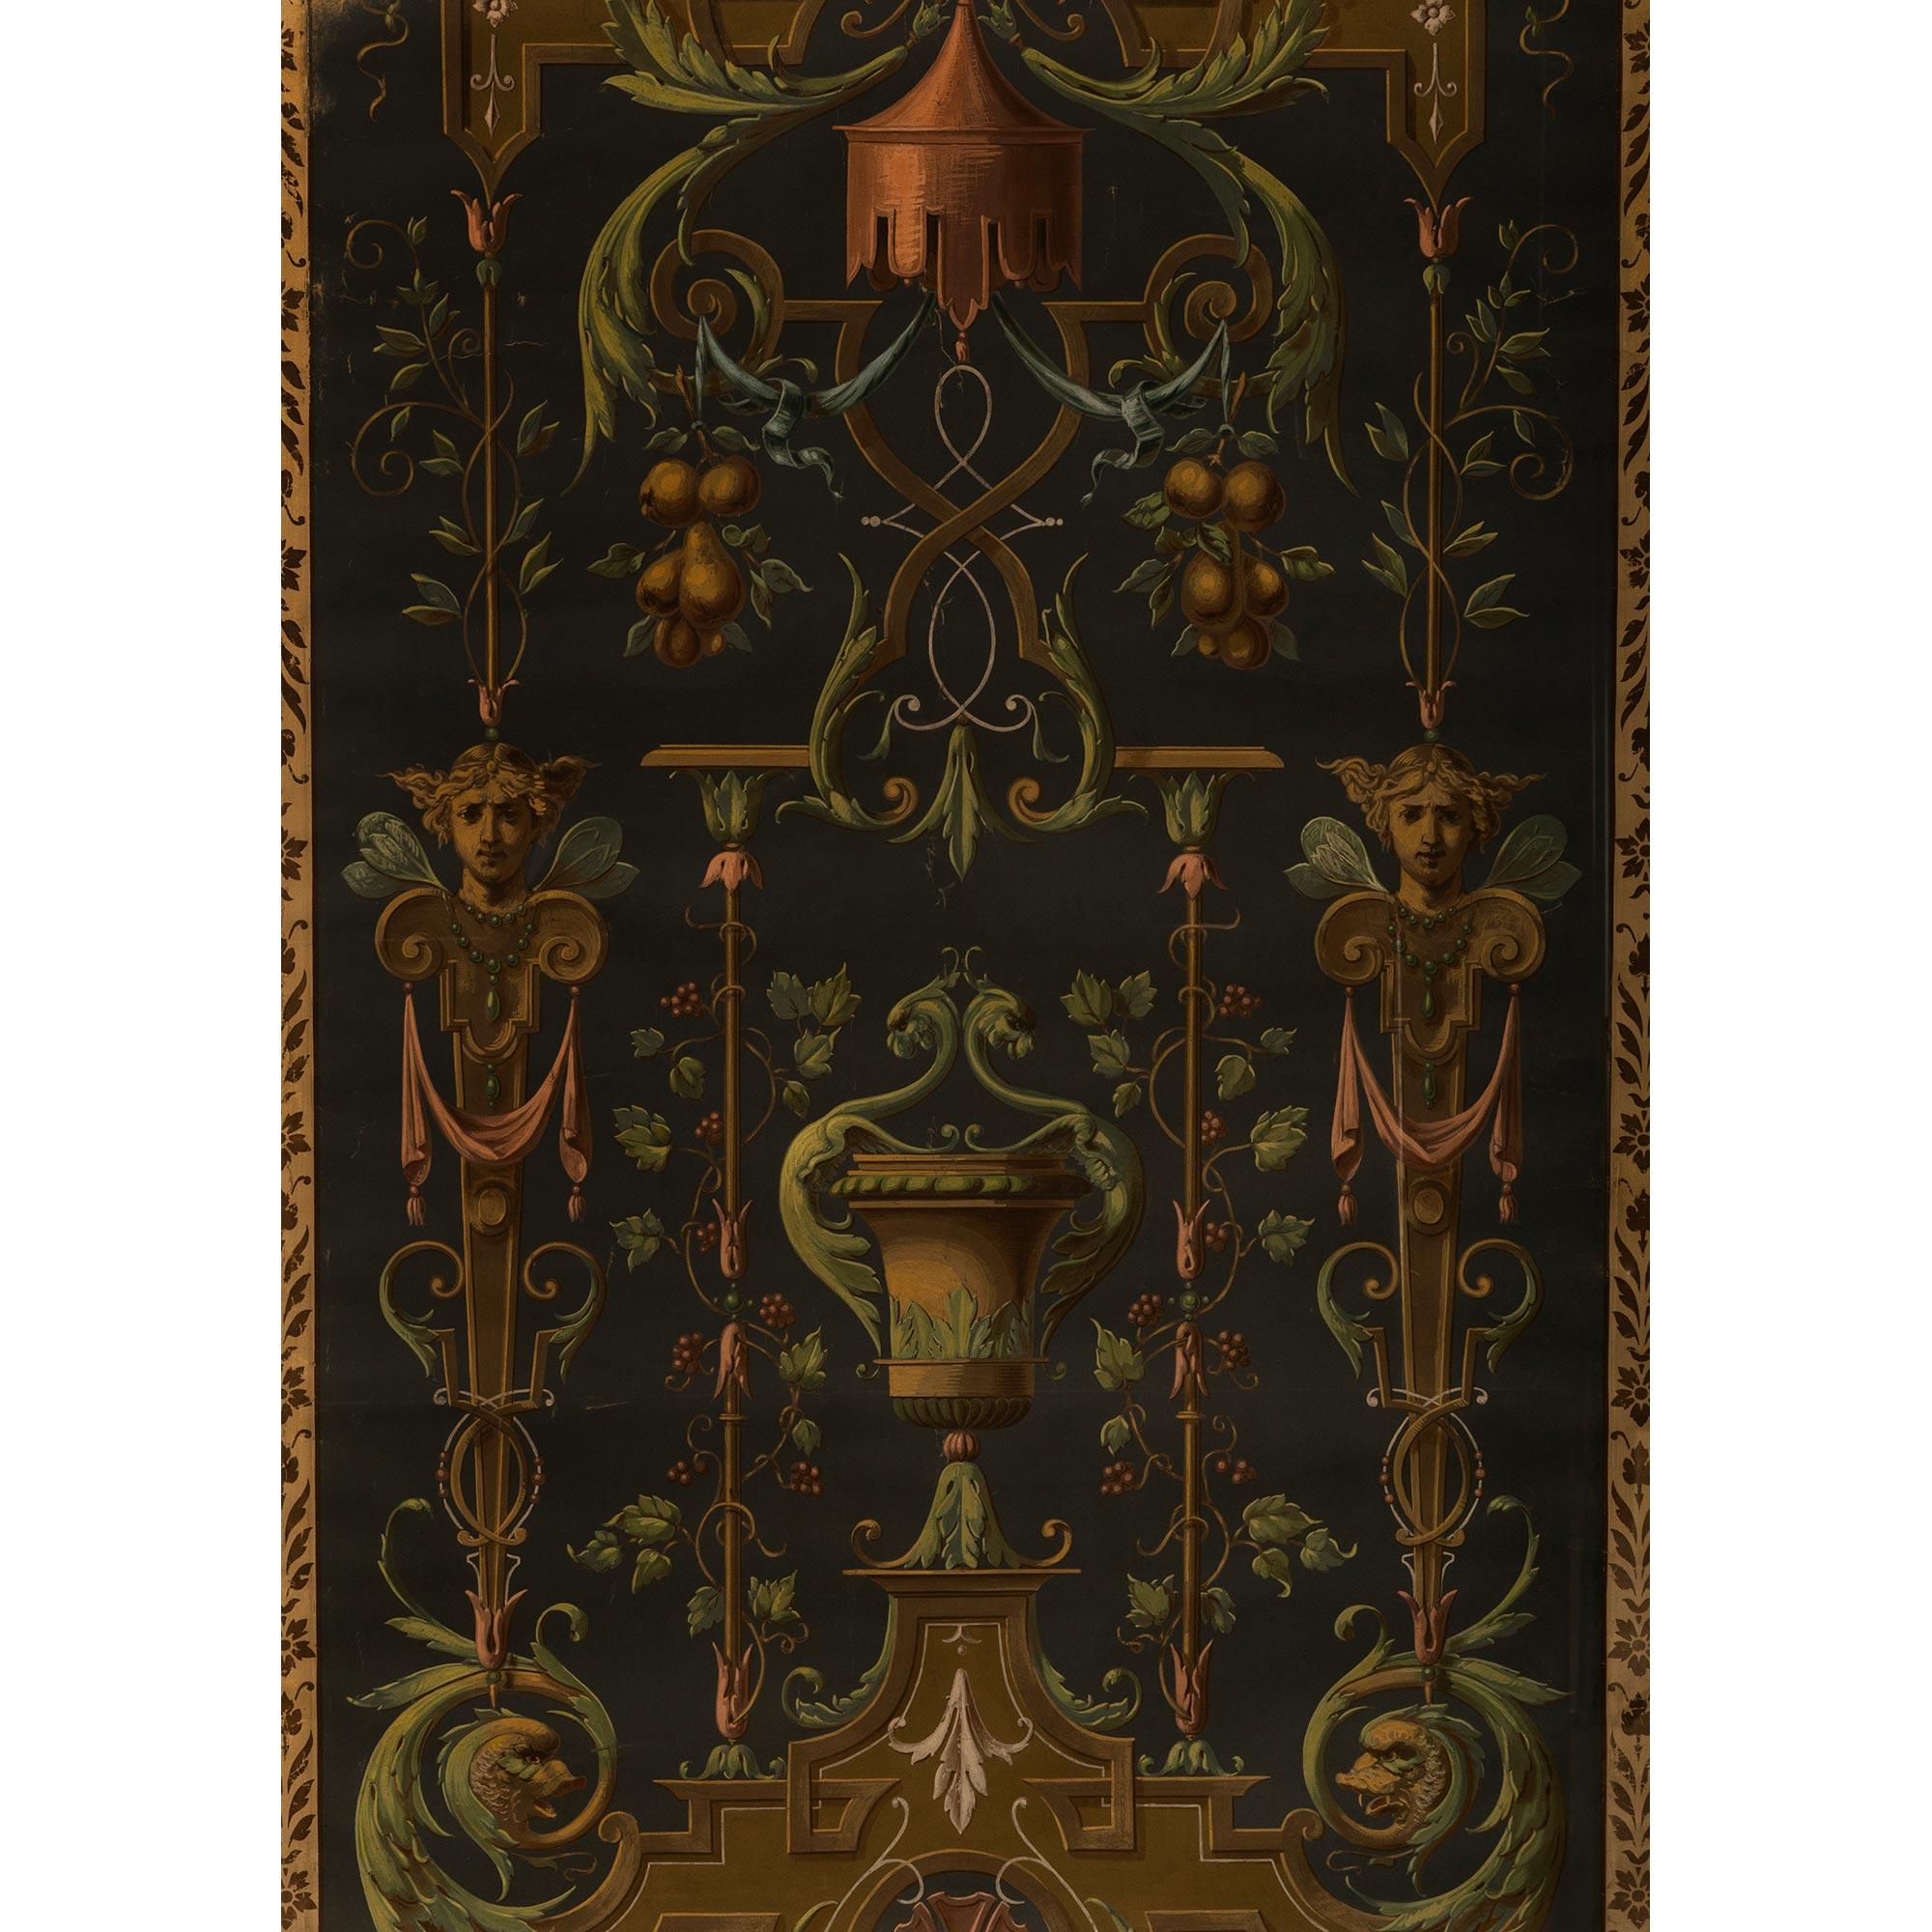 Italian 18th Century Giltwood And Fresco Wall Decor/Panel For Sale 1